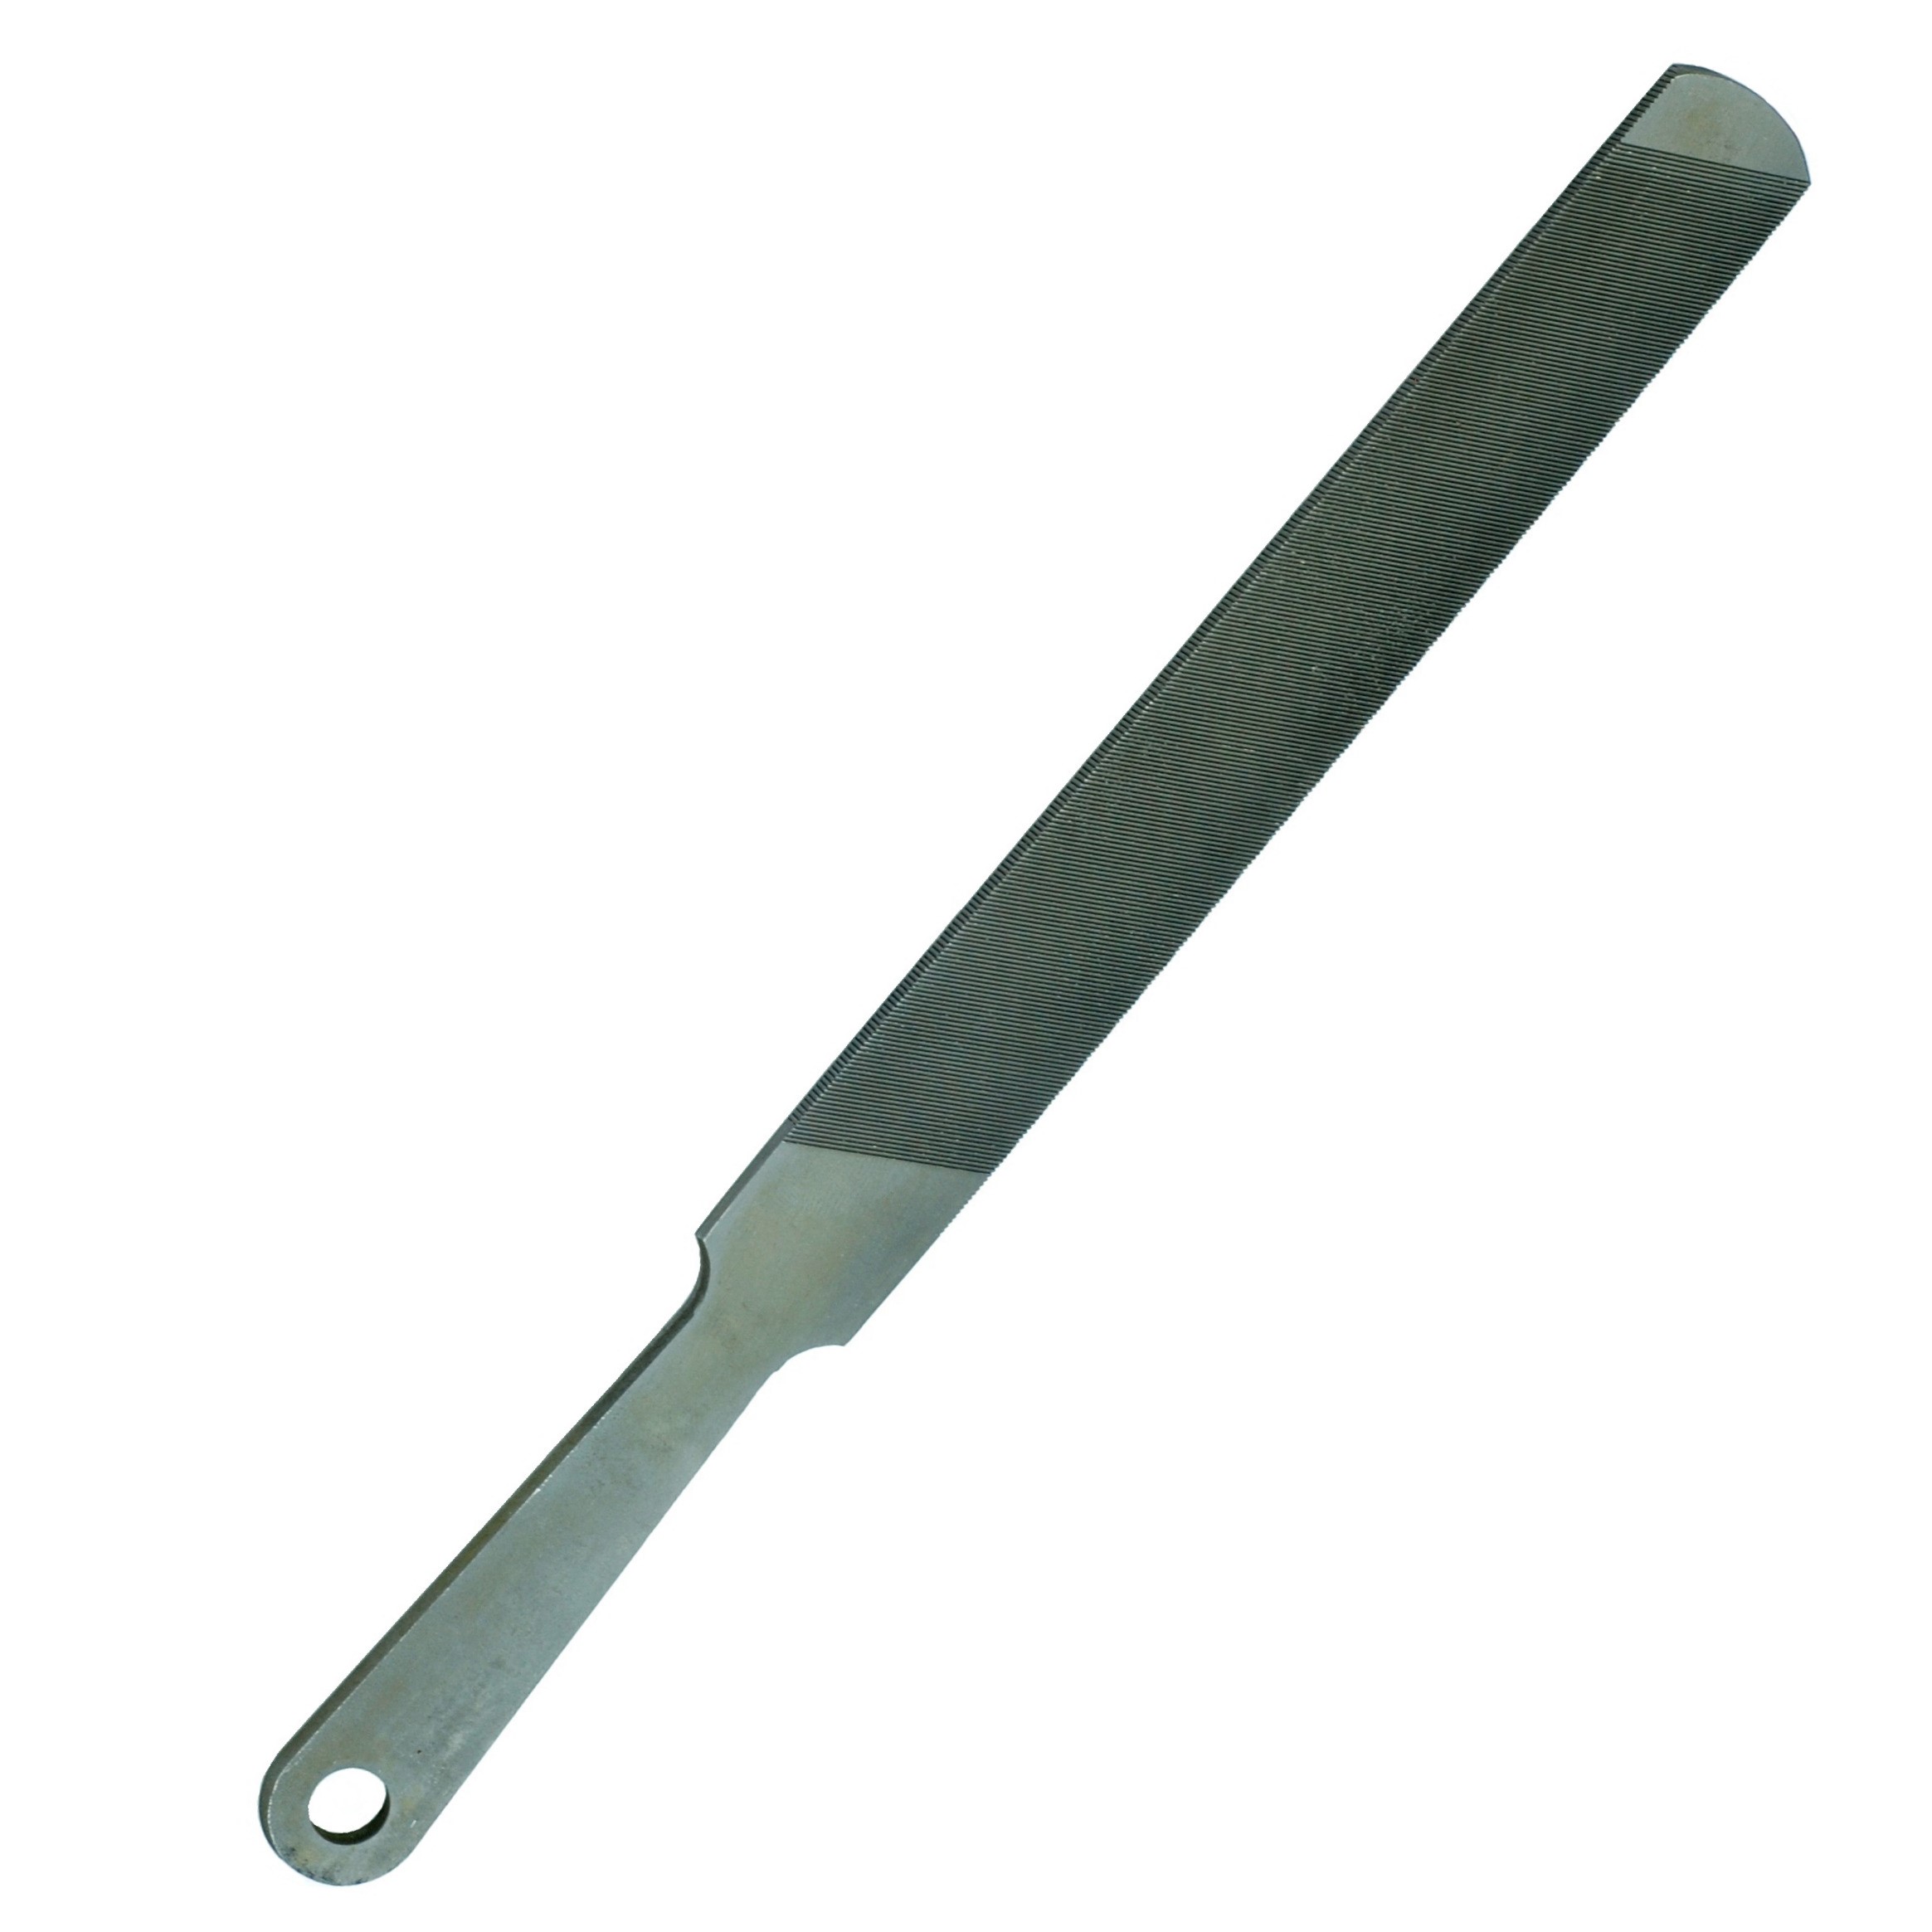 https://www.machetespecialists.com/wp-content/uploads/2016/09/Mercer-6-inch-pocket-file-machete-sharpener.jpg